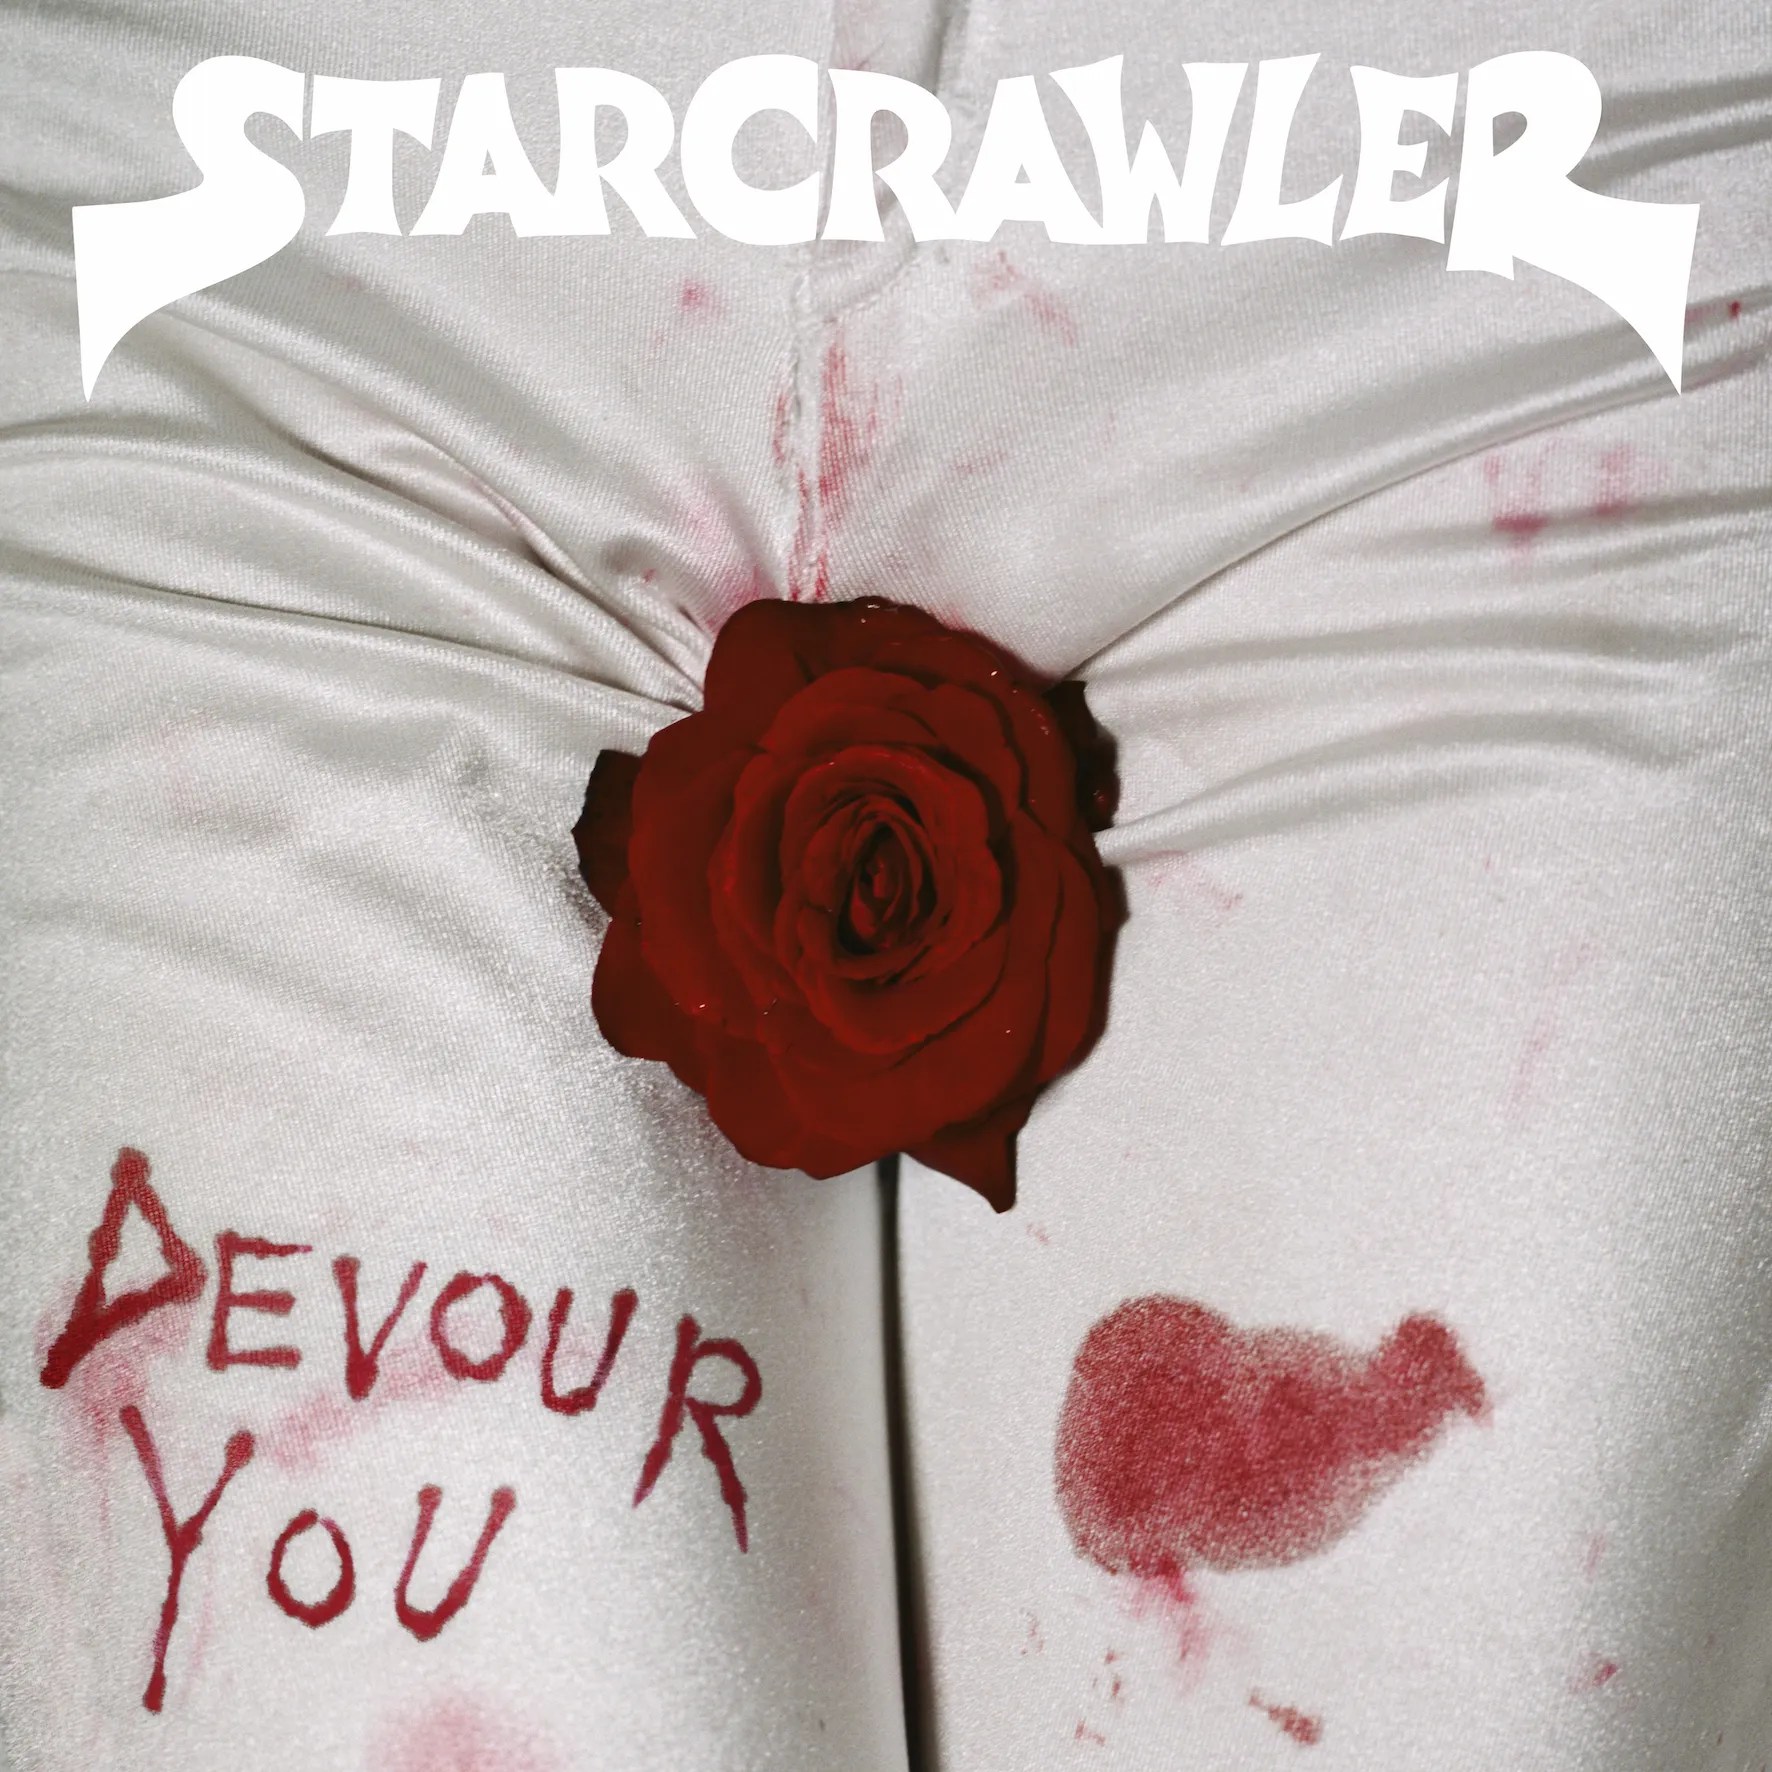 <strong>Starcrawler - Devour You</strong> (Vinyl LP - red)